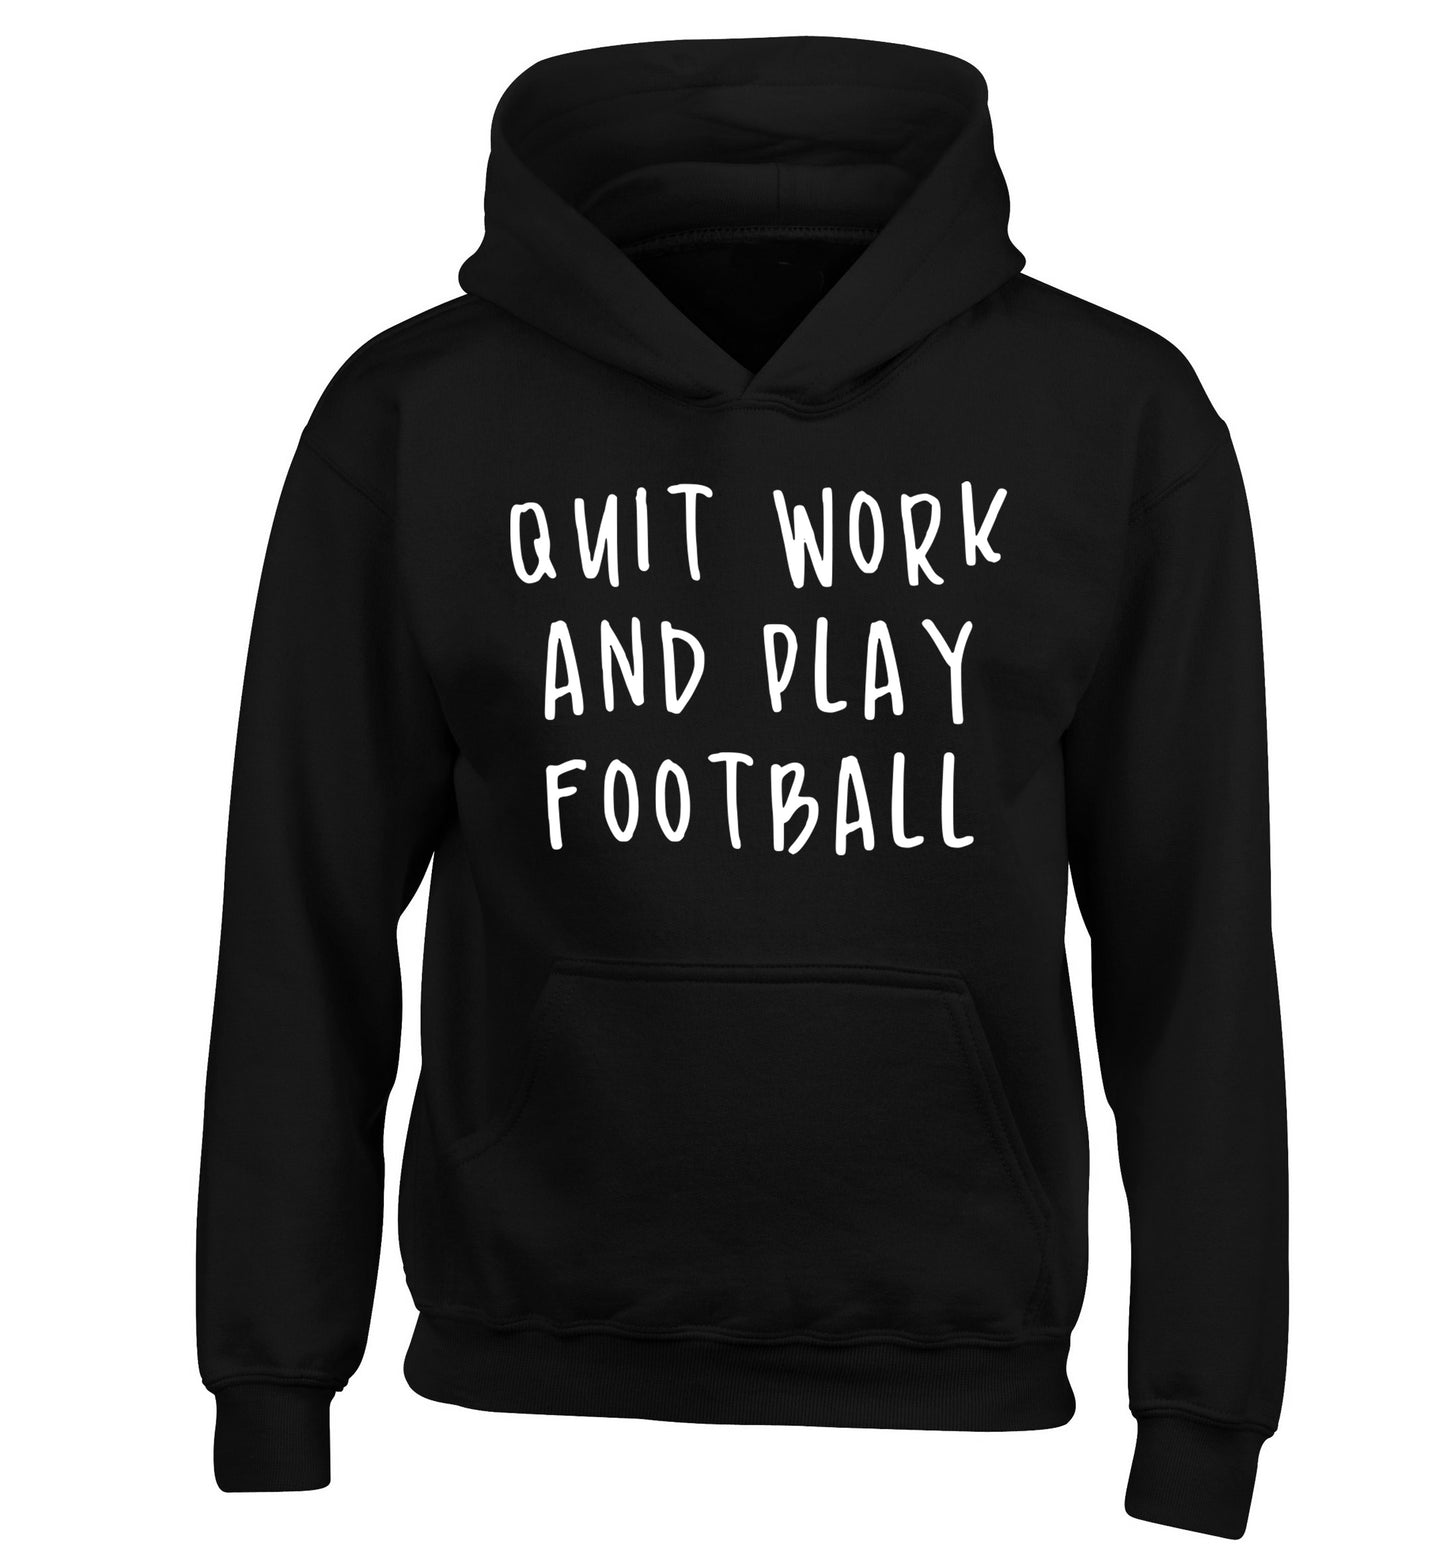 Quit work play football children's black hoodie 12-14 Years